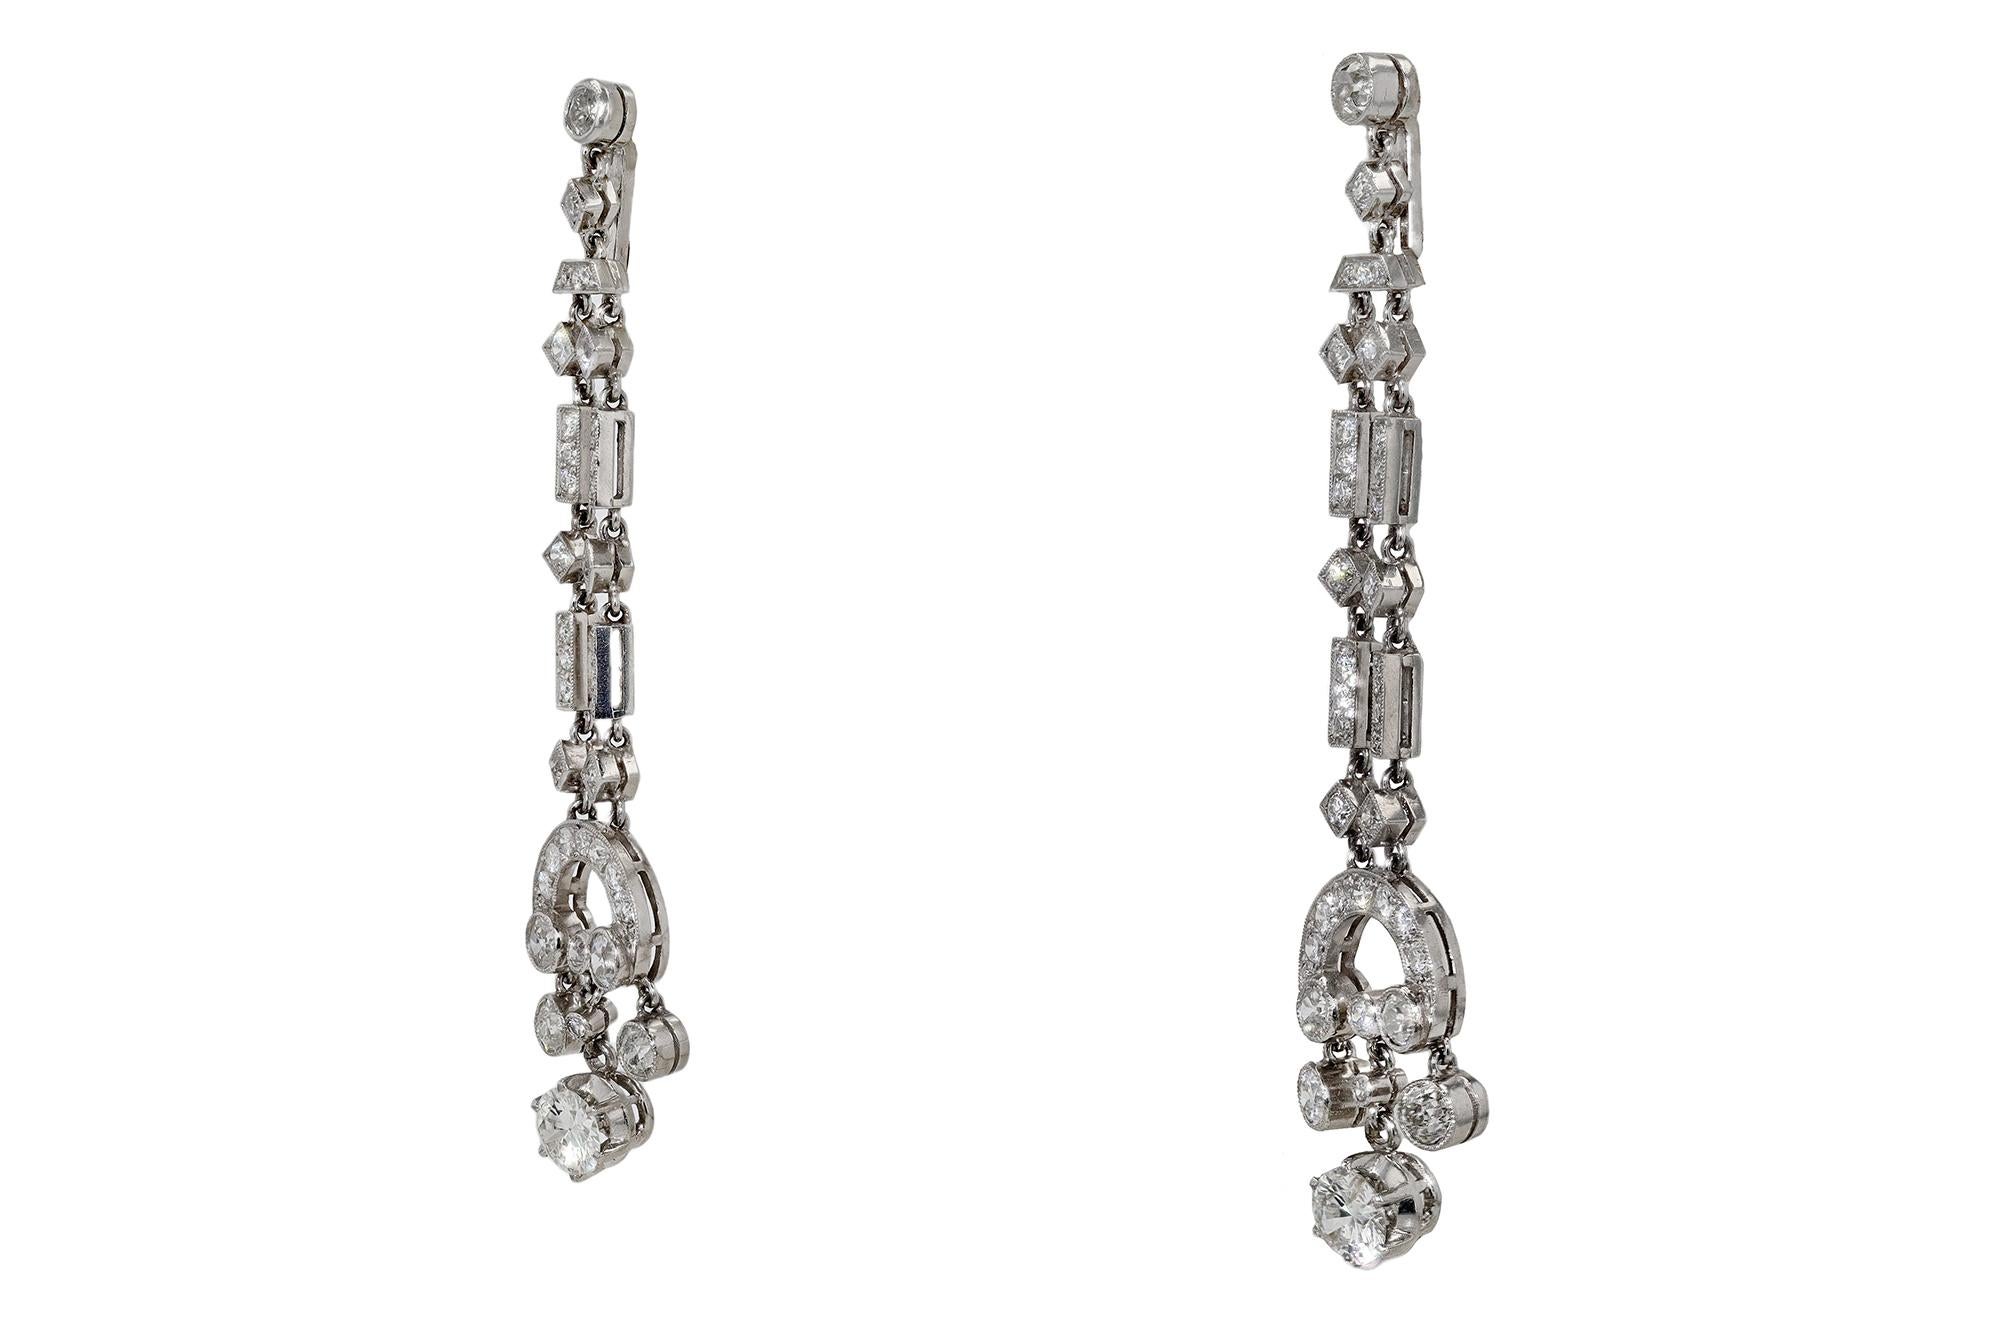 Brilliant Cut Art Deco Revival 3 Carat Diamond Drop Chandelier Earrings